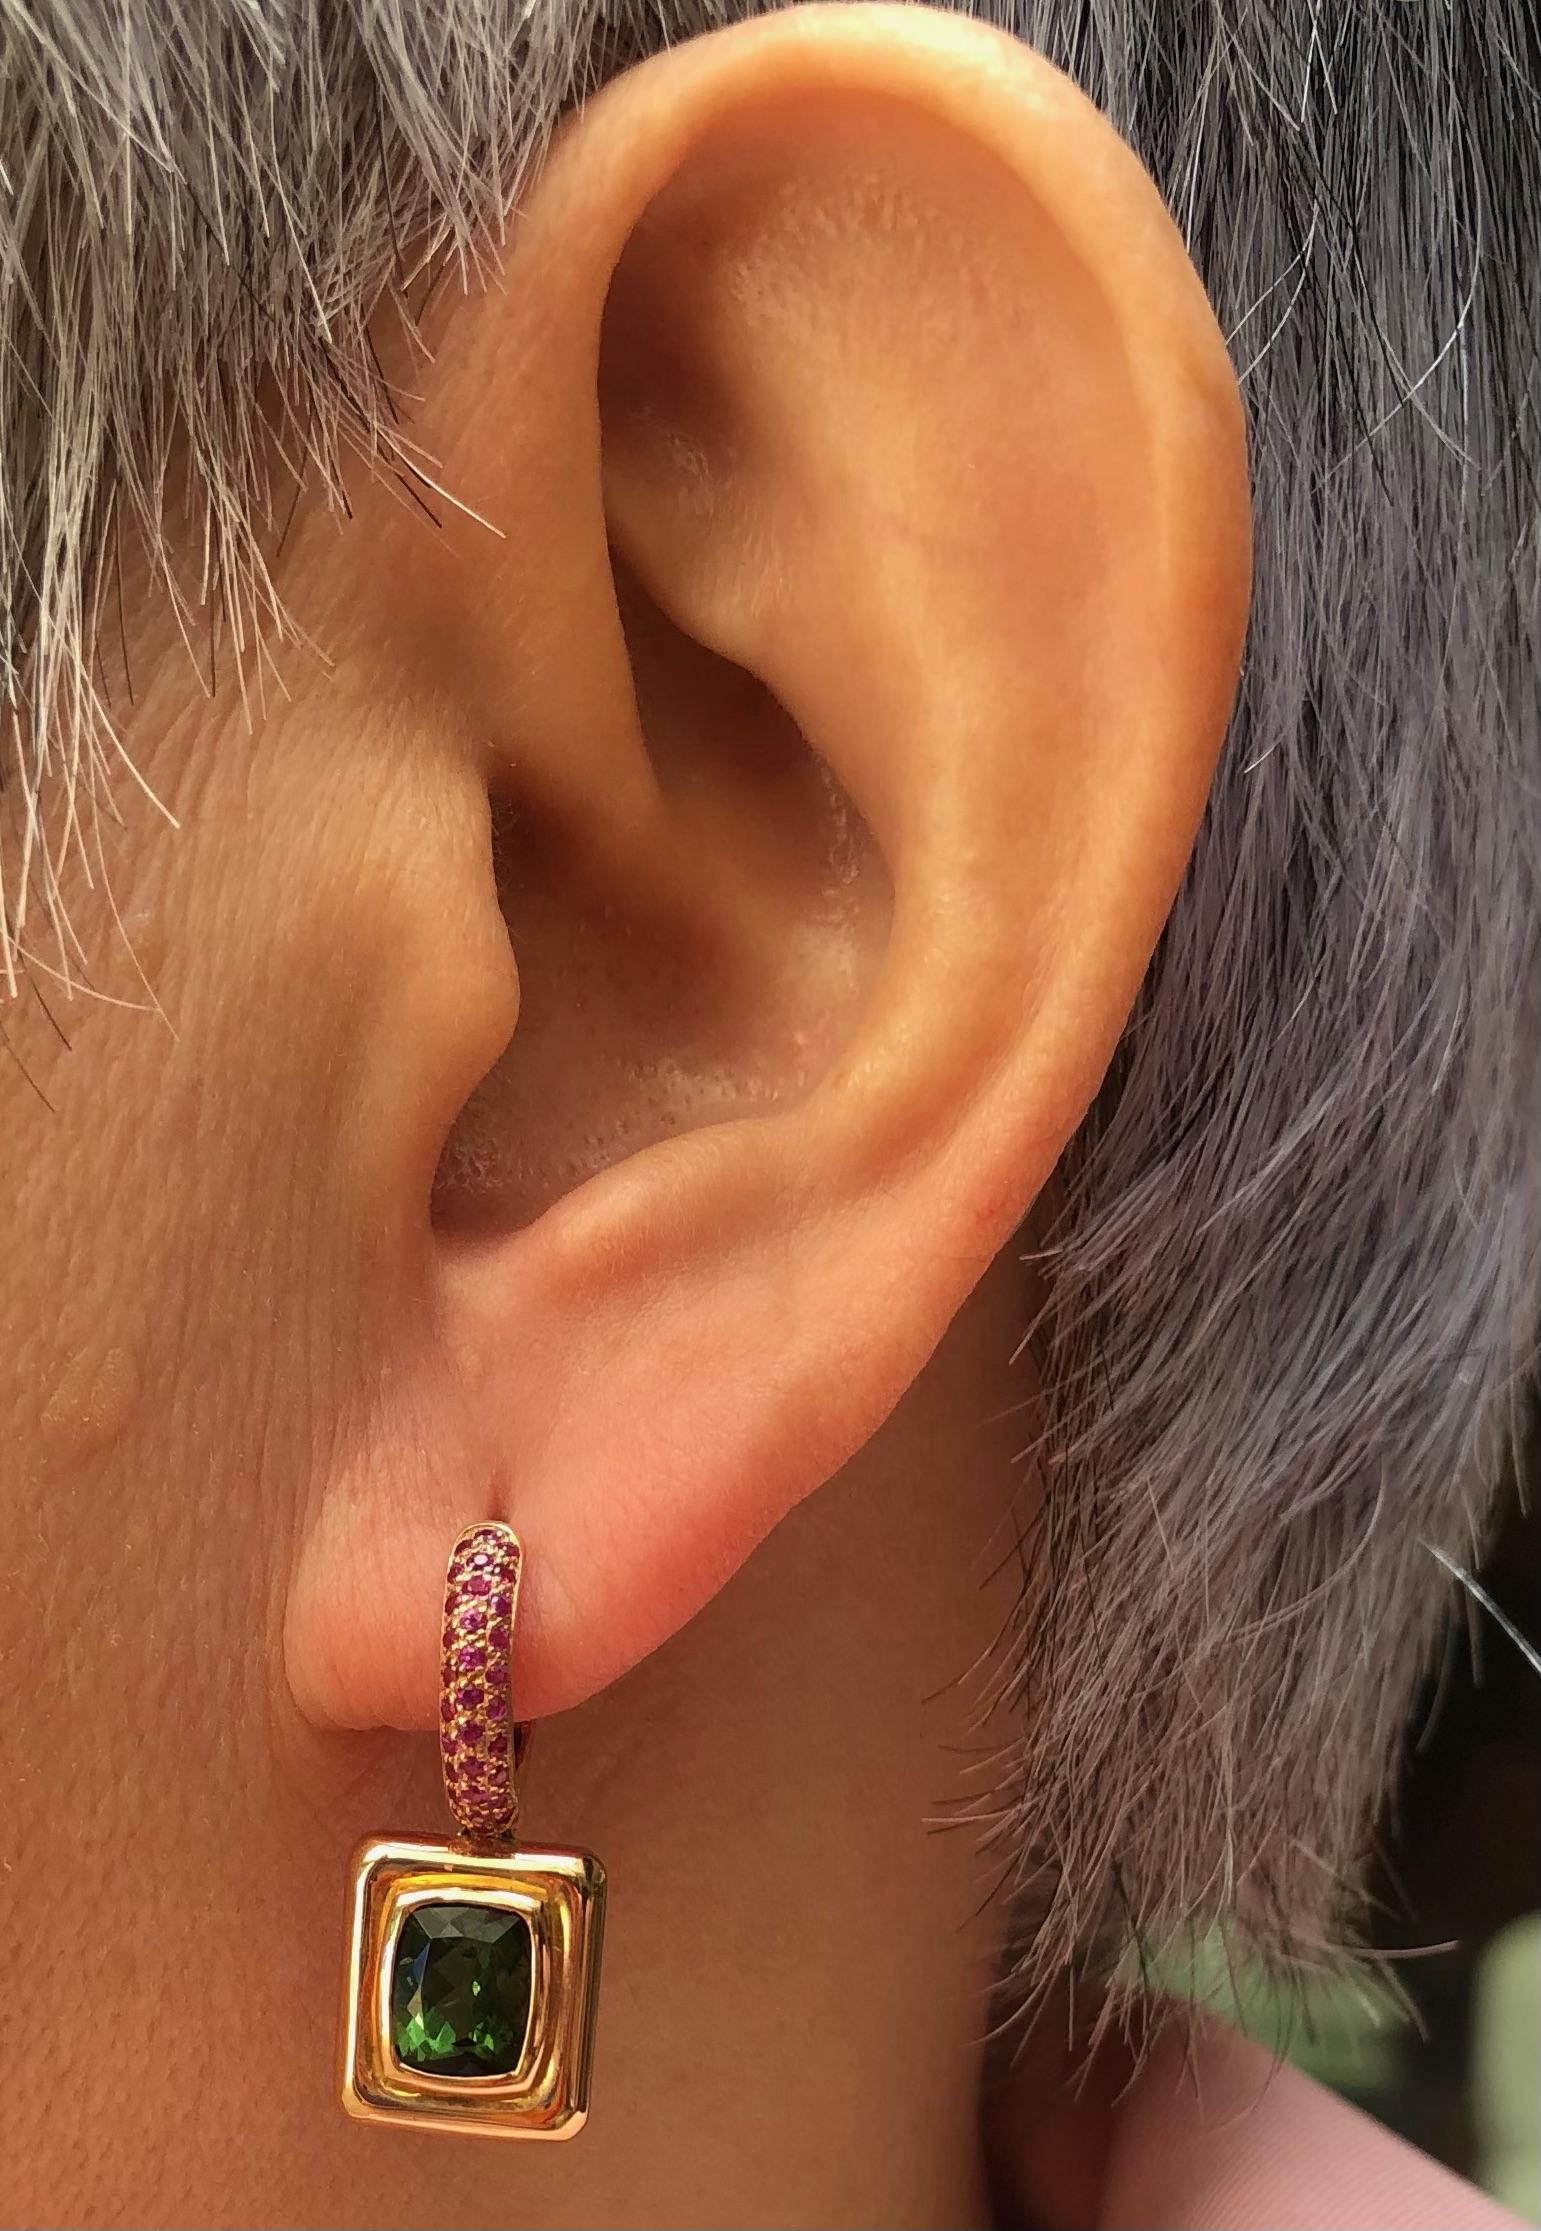 Green Tourmaline 3.15 carats with Pink Sapphire 0.48 carat Earrings set in 18 Karat Rose Gold Settings

Width: 1.1 cm
Length: 2.8 cm 

